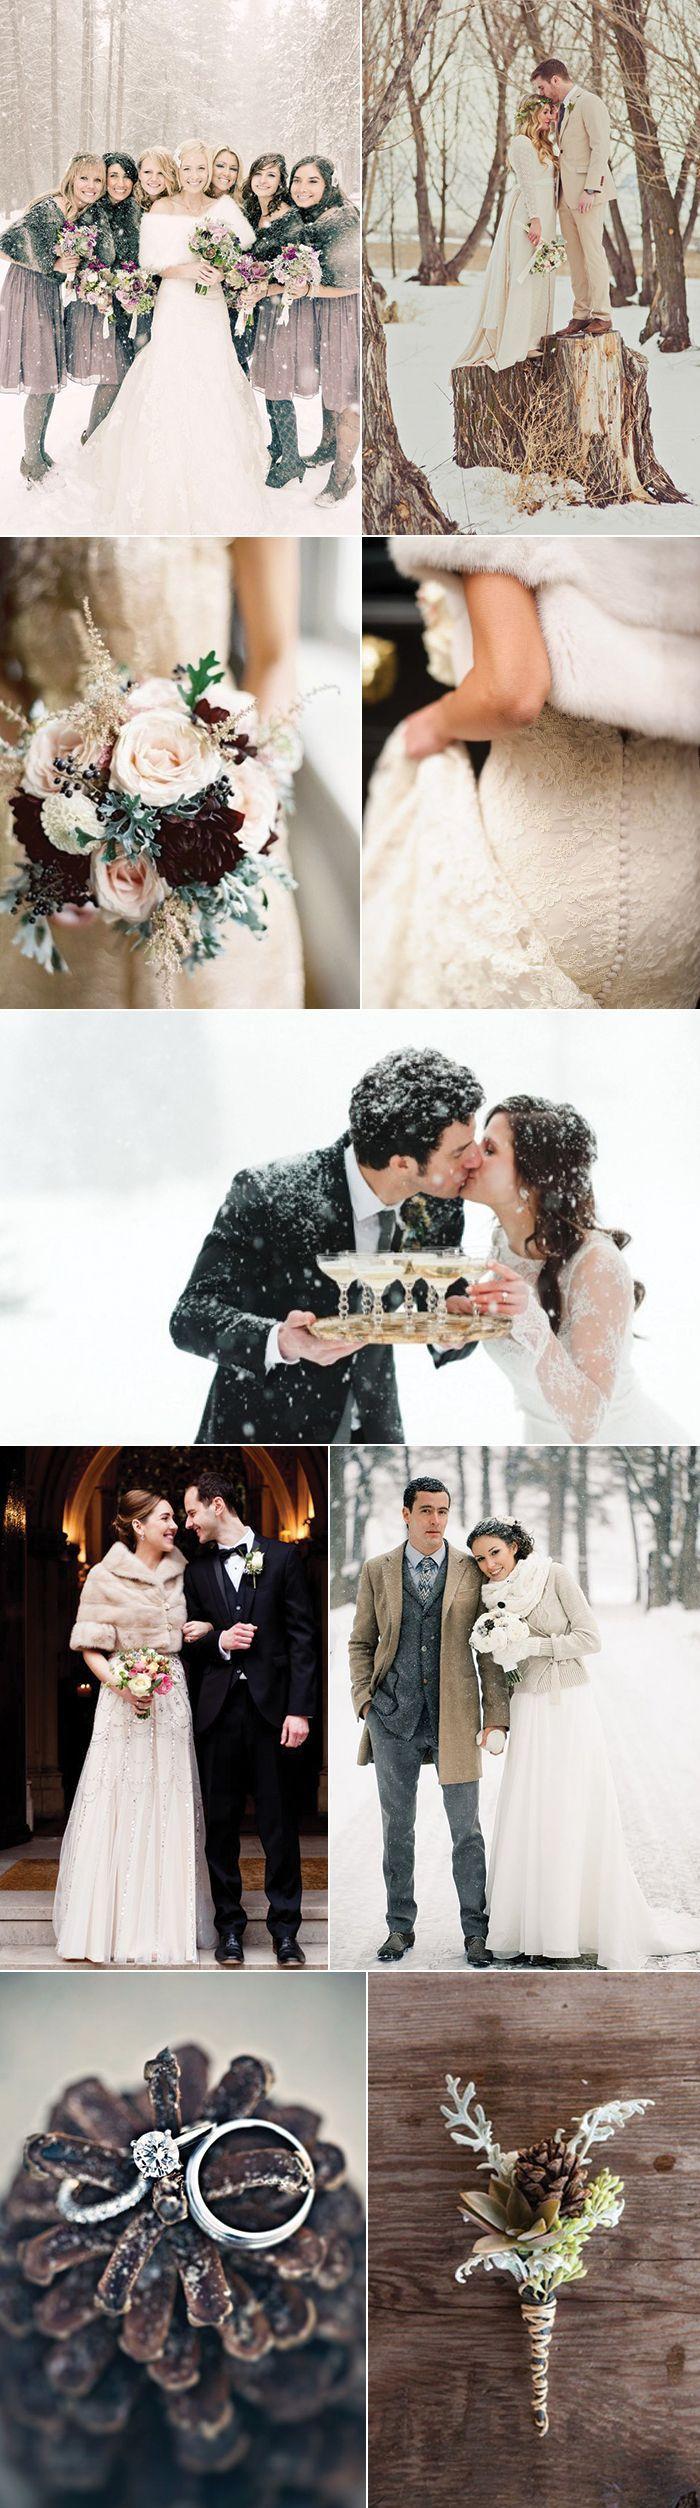 زفاف - 2015 Fall And Winter Wedding Trends